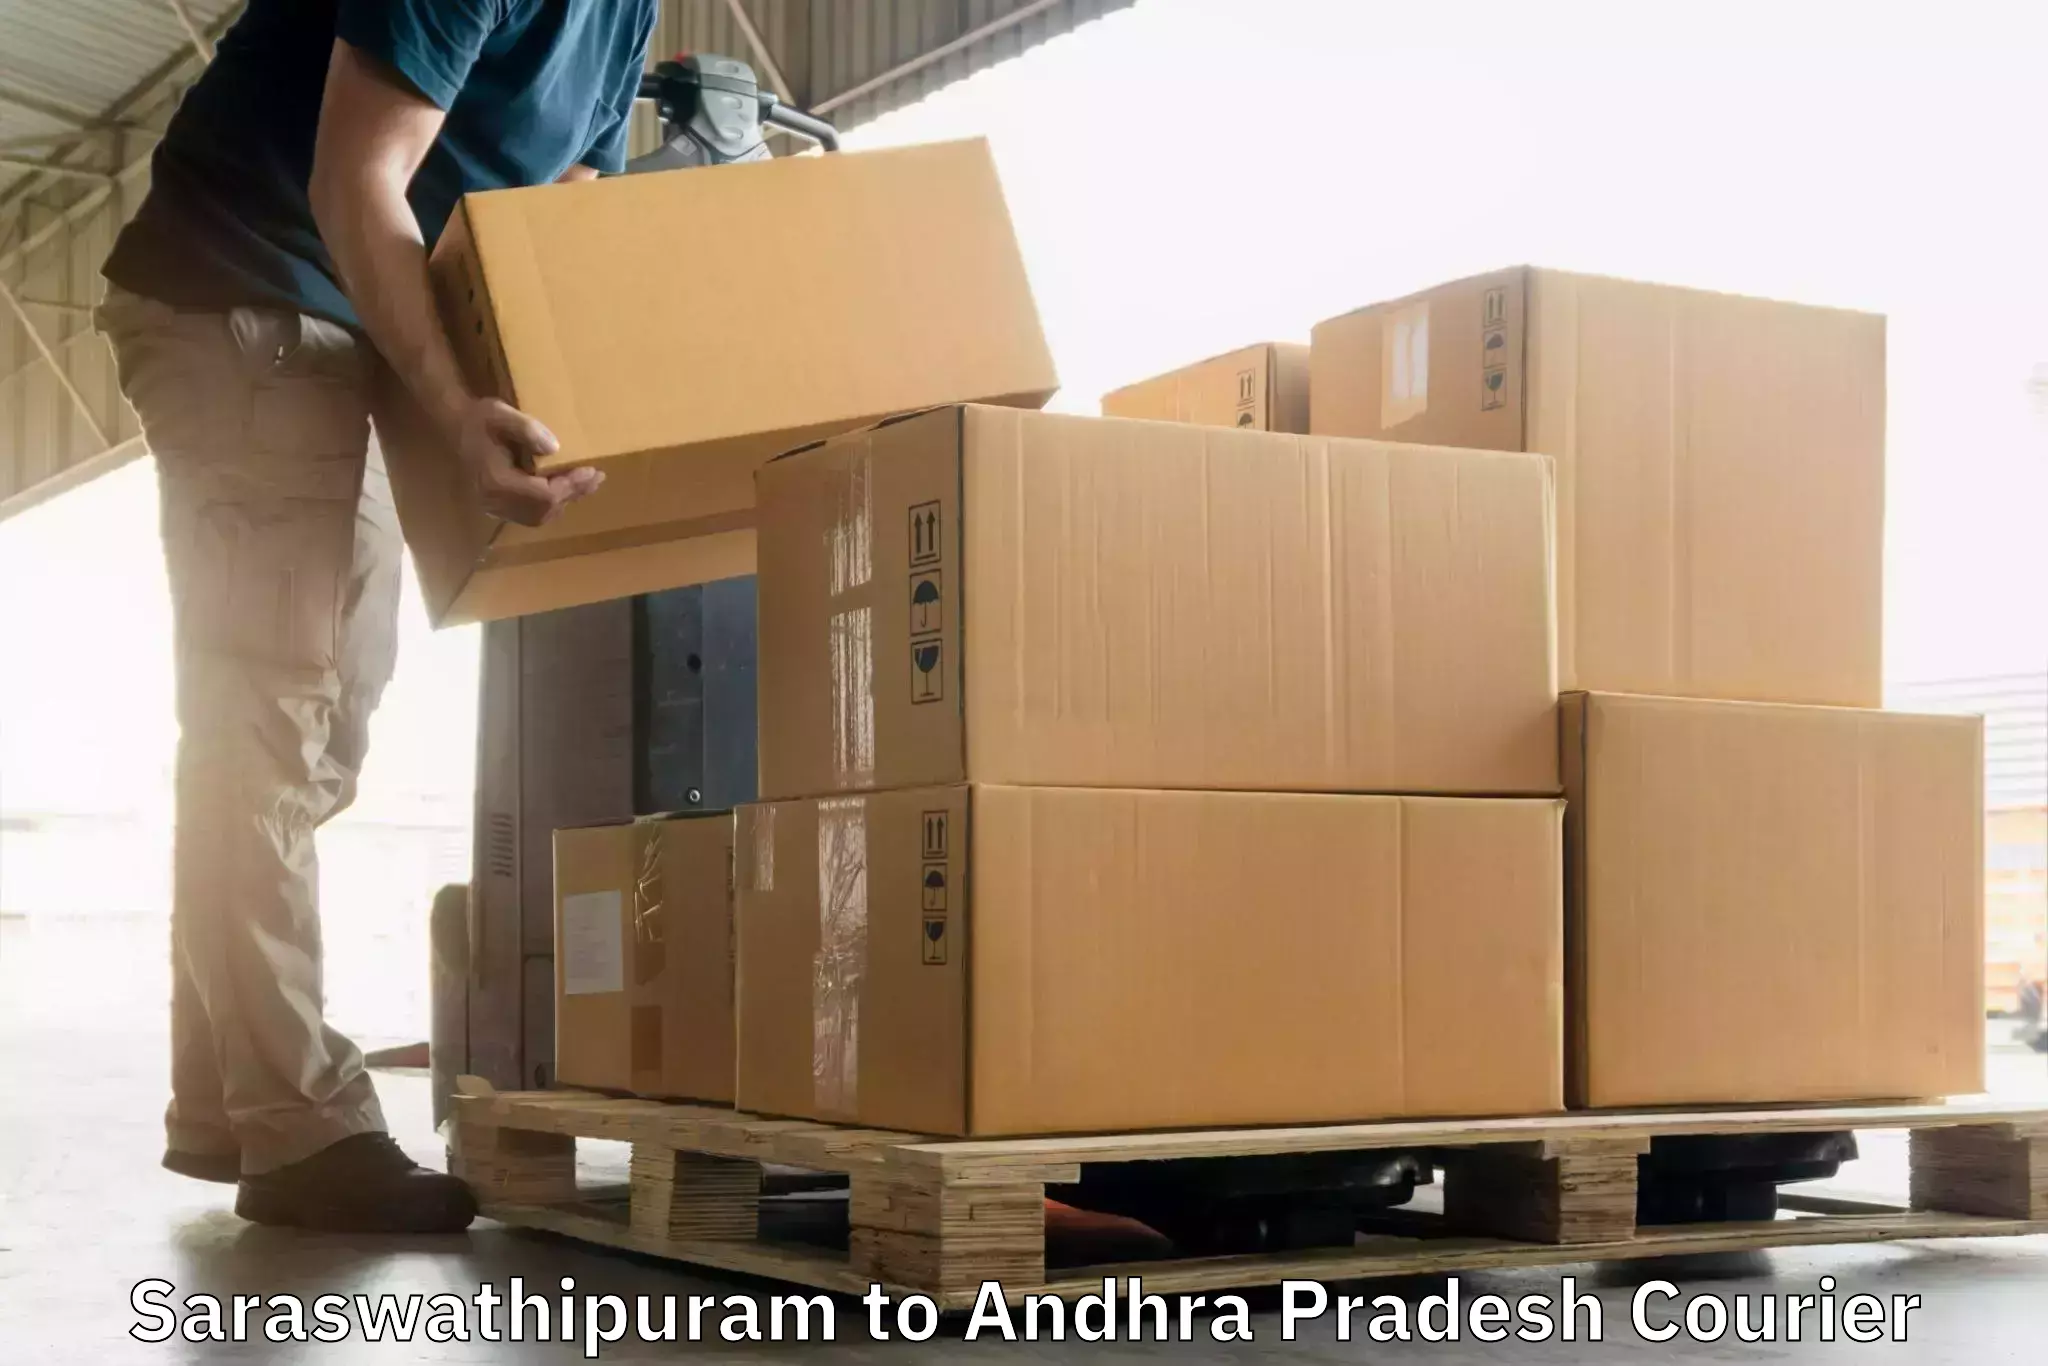 High-speed parcel service Saraswathipuram to Andhra Pradesh